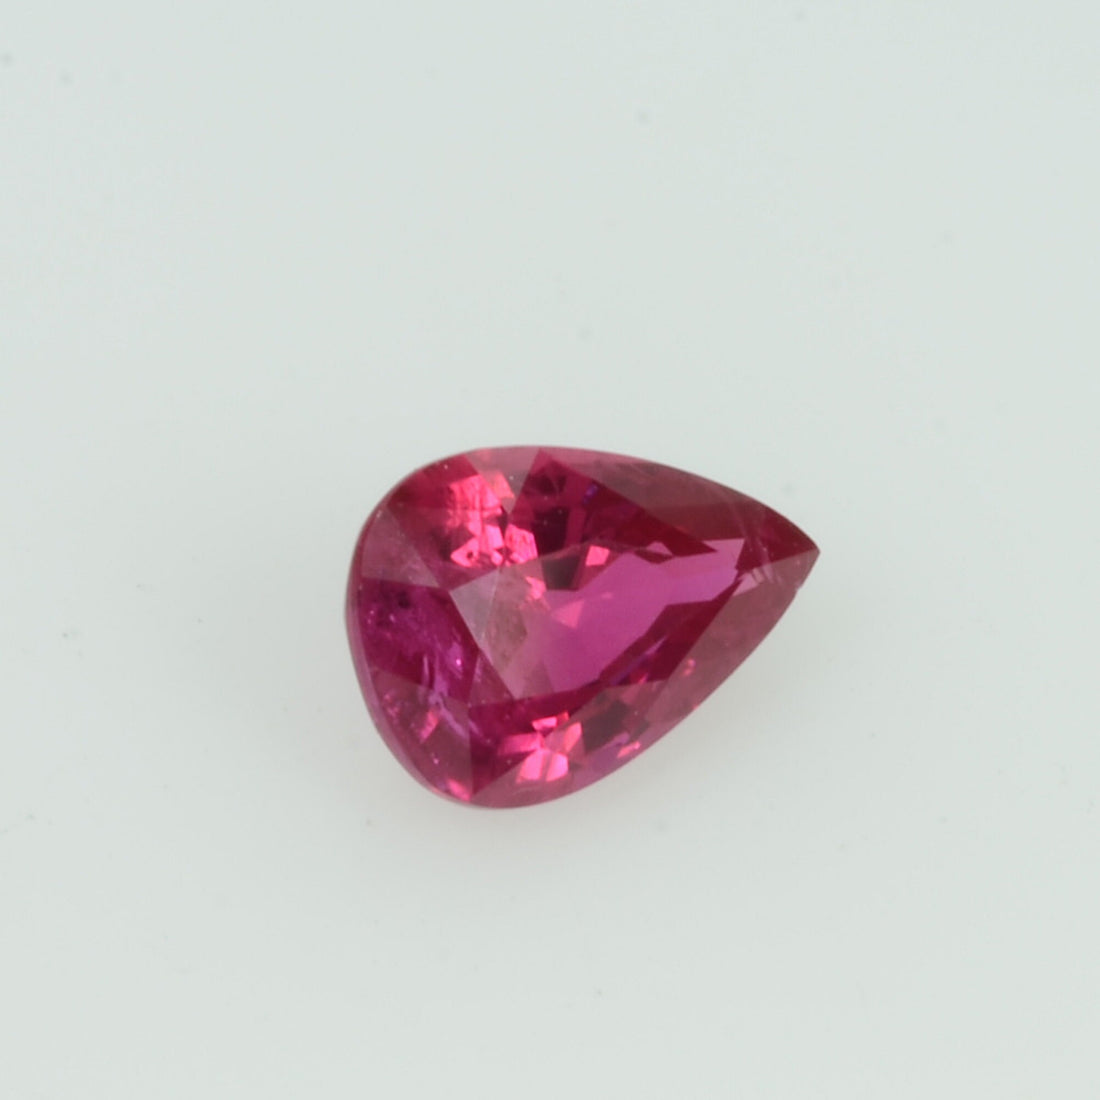 0.44 cts Natural Vietnam Ruby Loose Gemstone Pear Cut